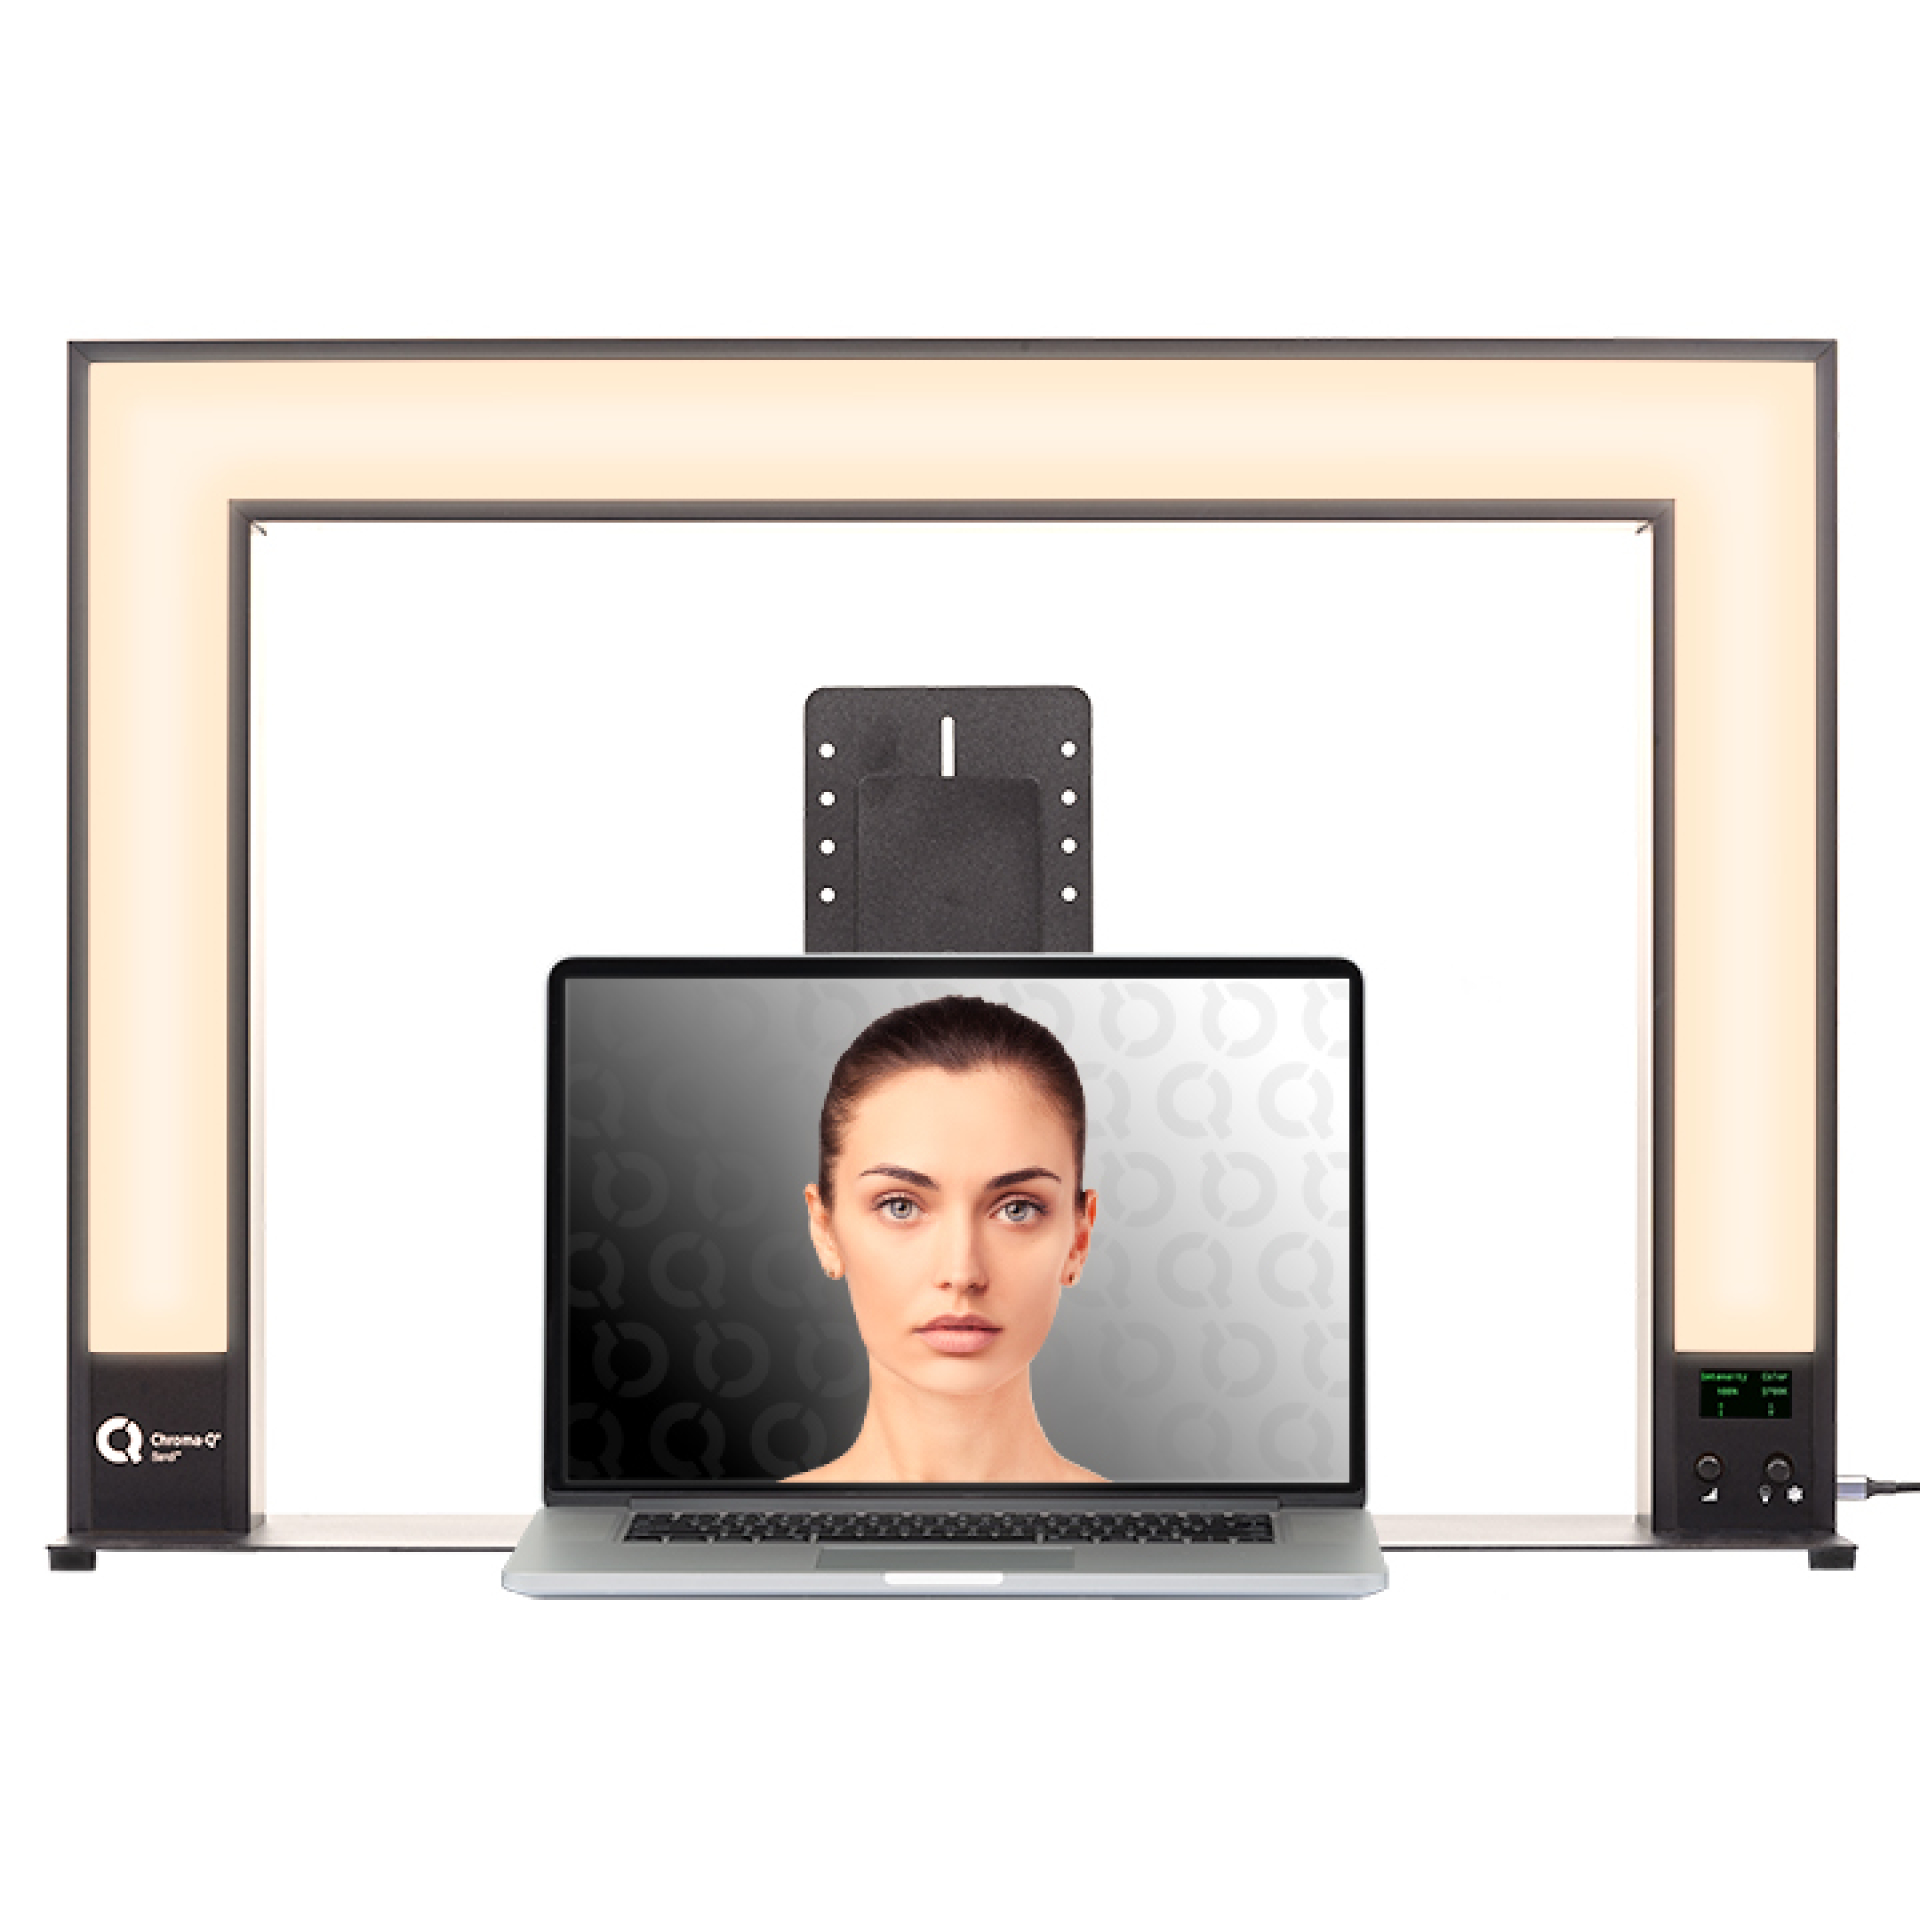 Chroma-Q Sandi - Warm white light with laptop